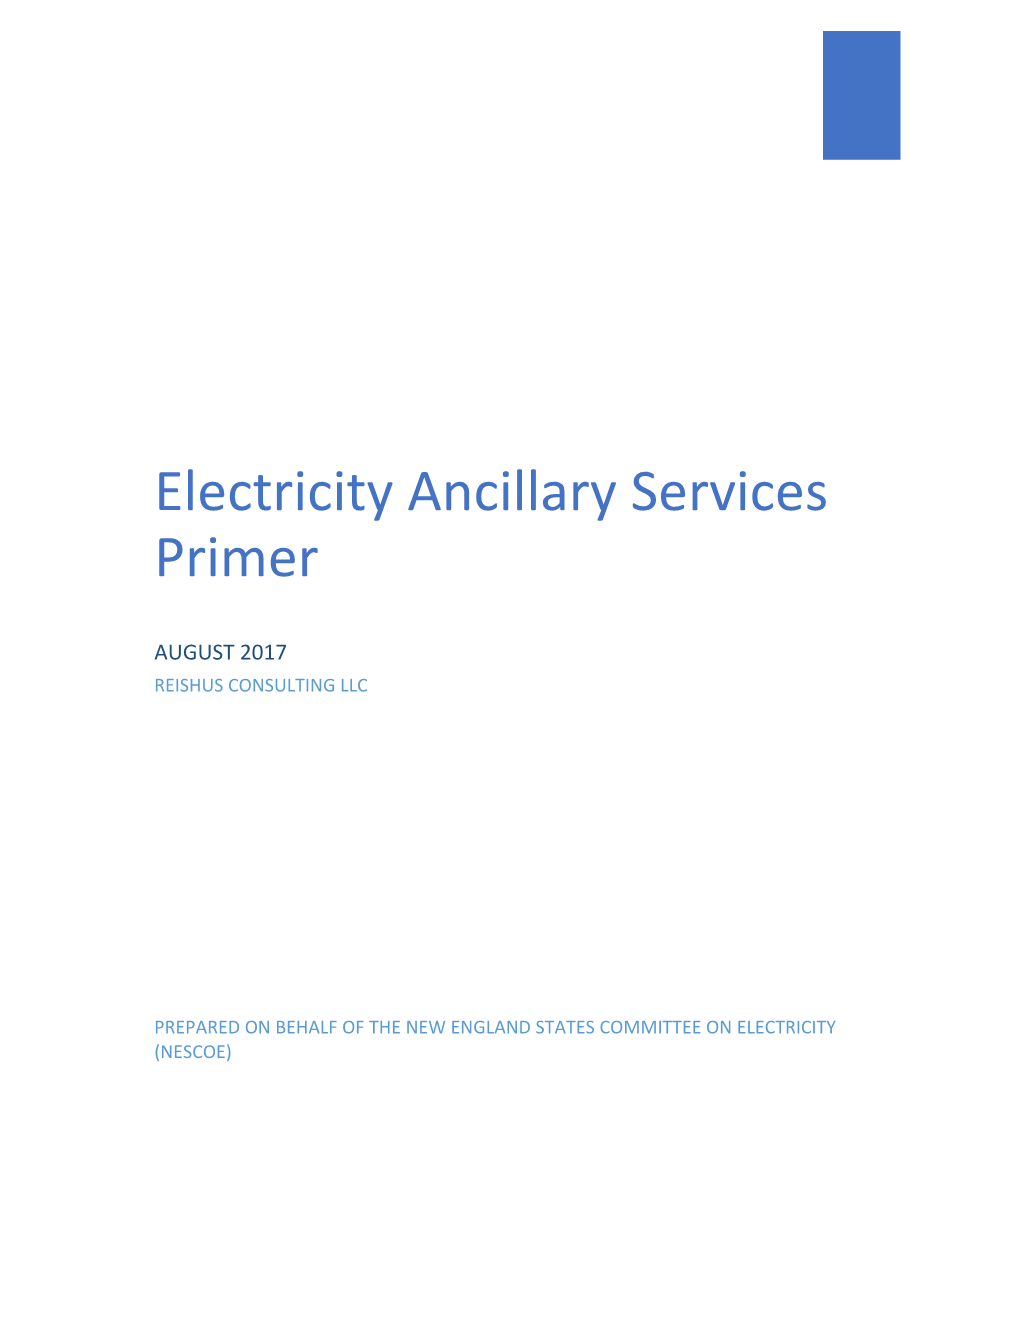 Electricity Ancillary Services Primer